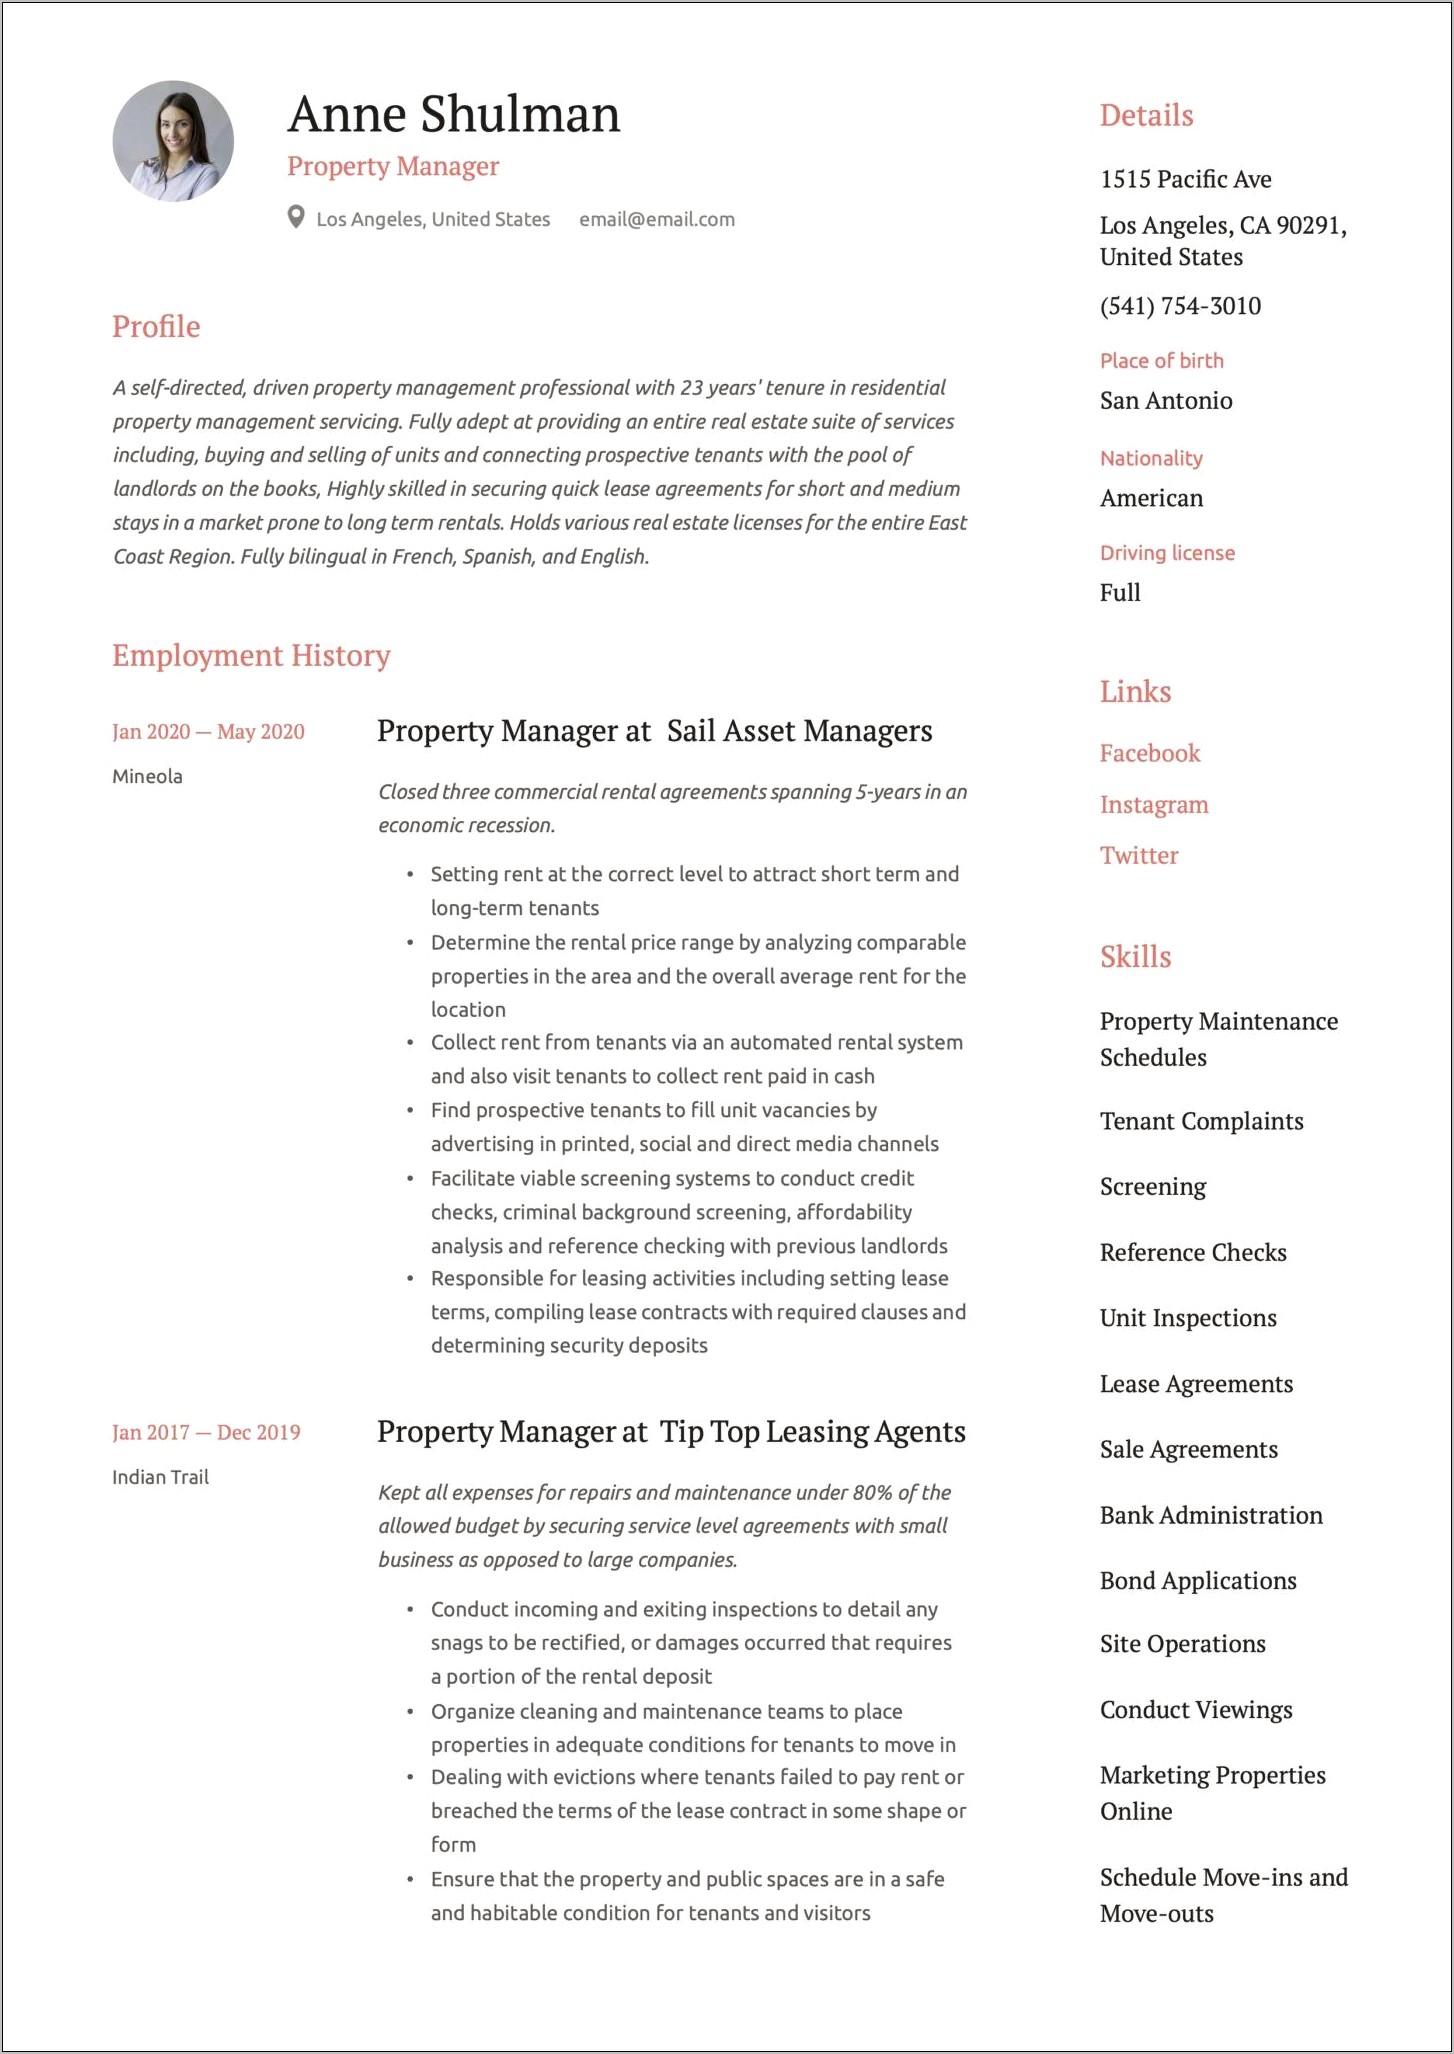 Keywords For Property Manager Resume